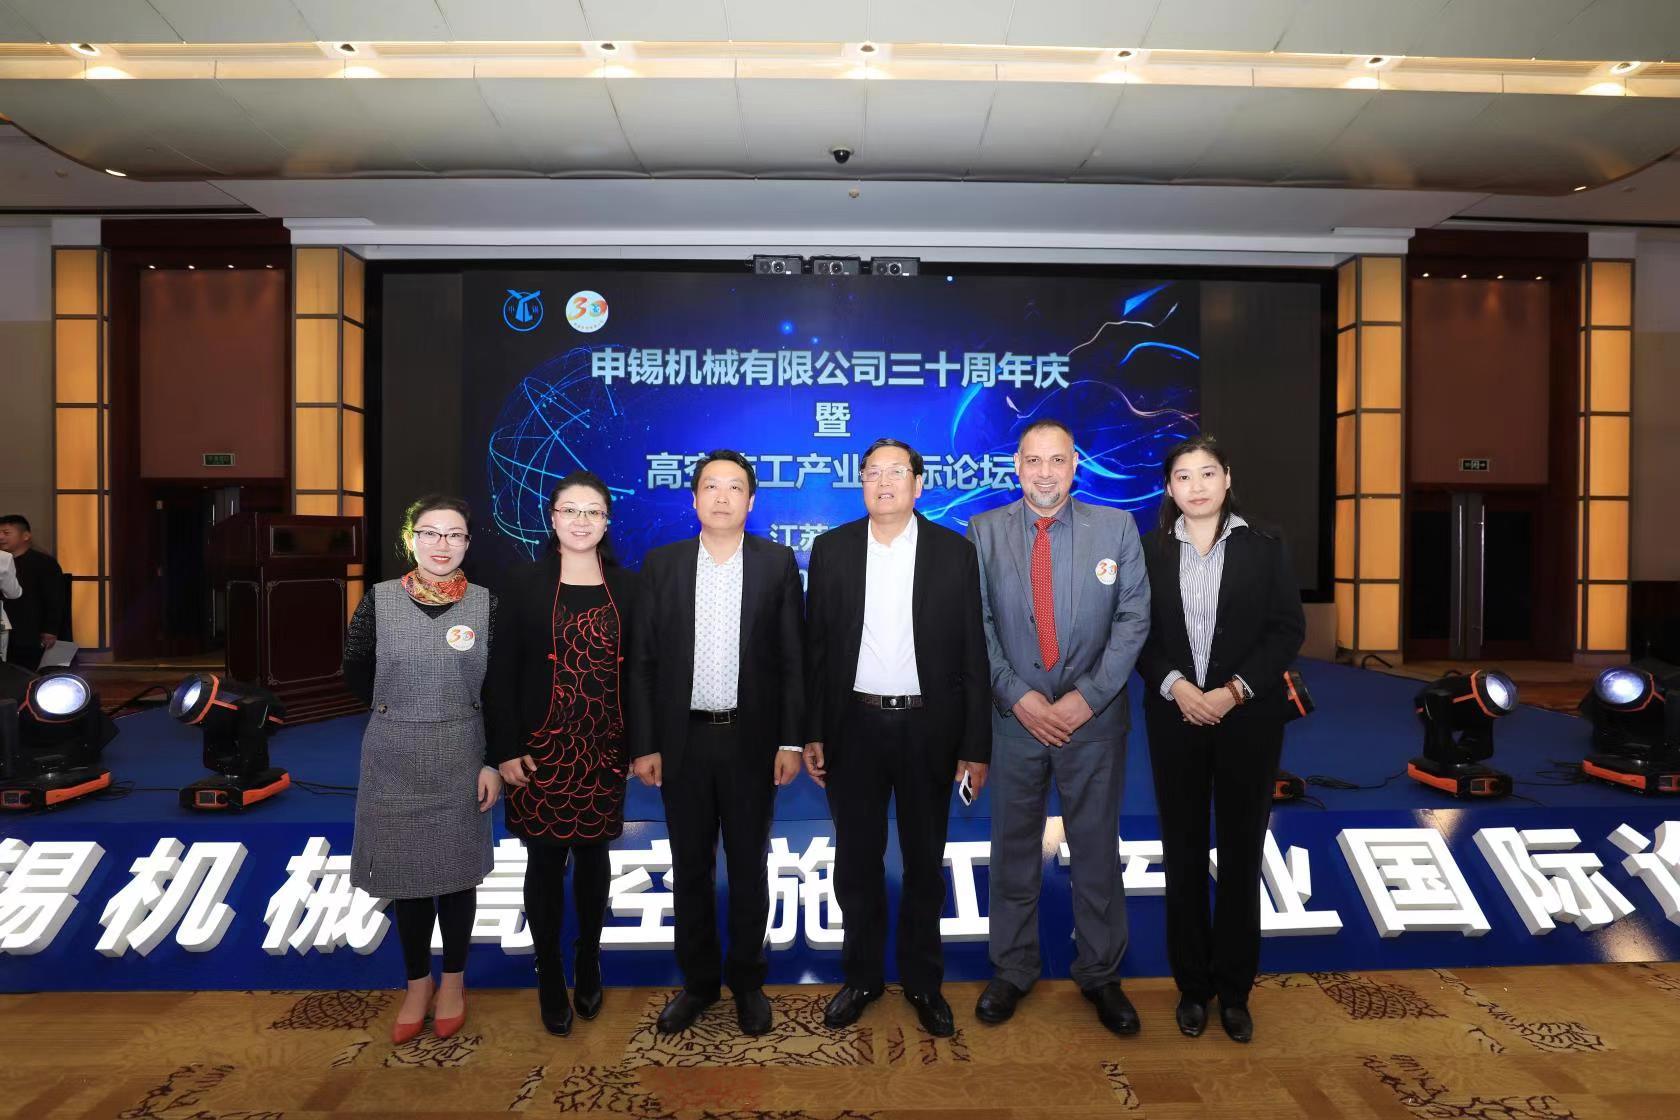 The 30th Anniversary ceremony of Shenxi Machinery Co., LTD.